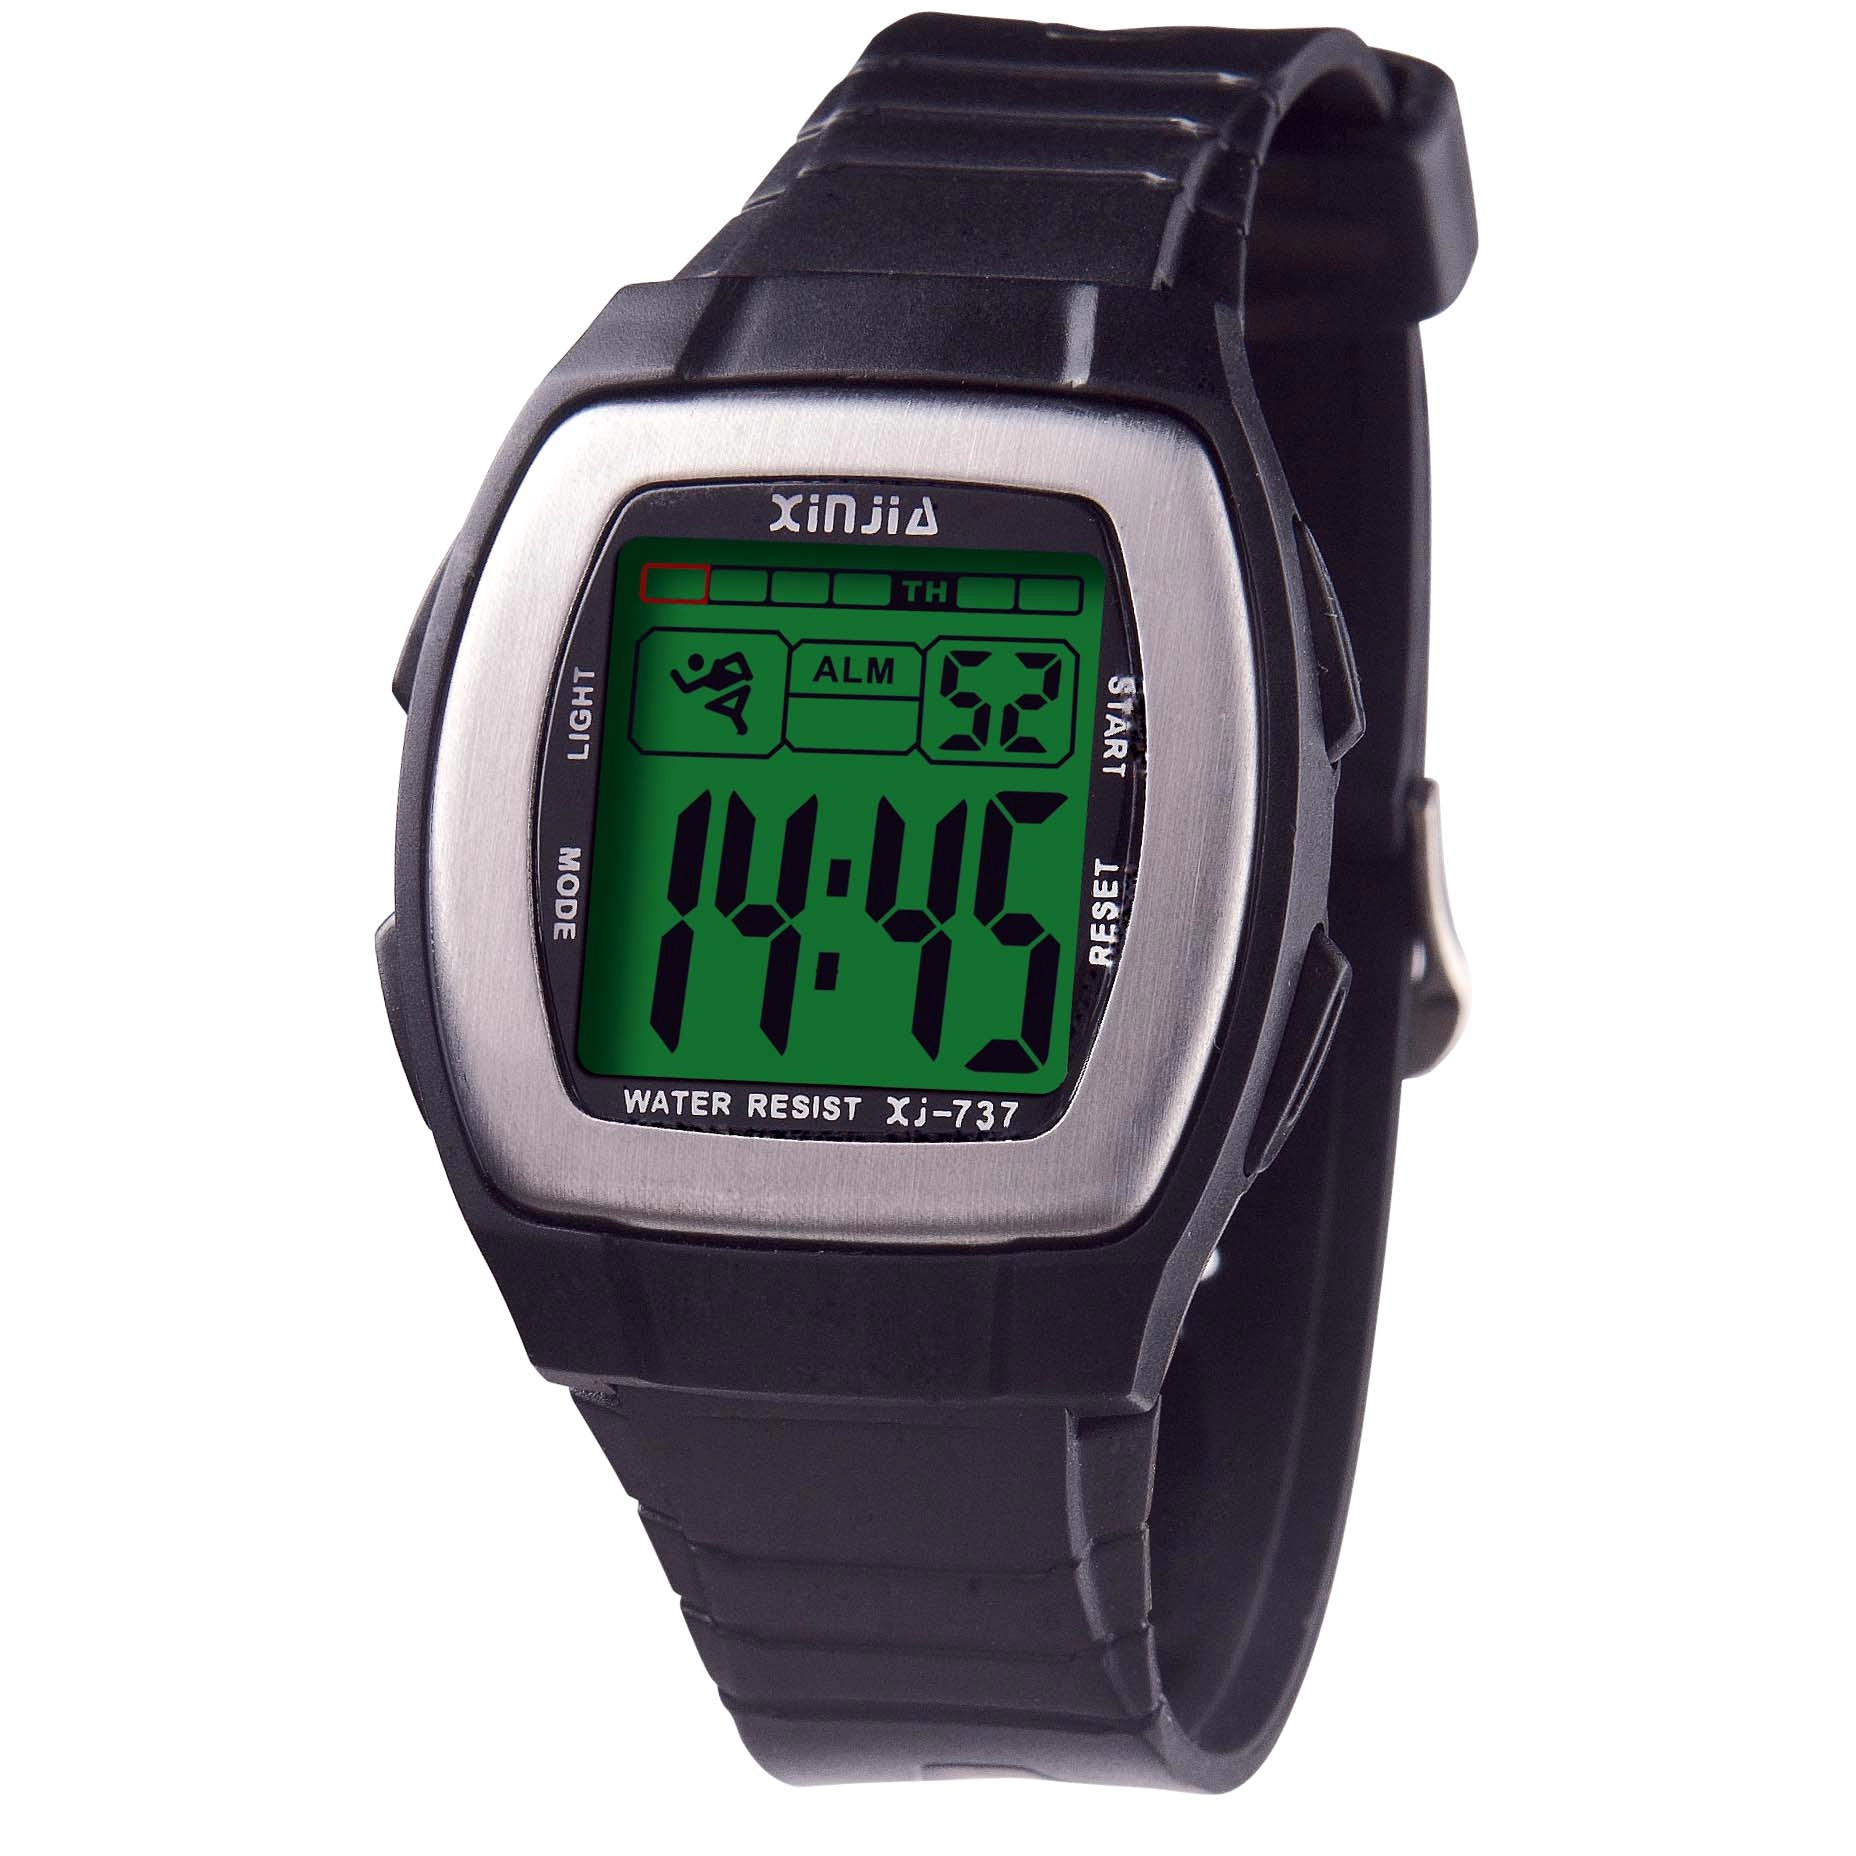 Promotion Xinjia Black Square Digital Water Resistant Wrist Watch